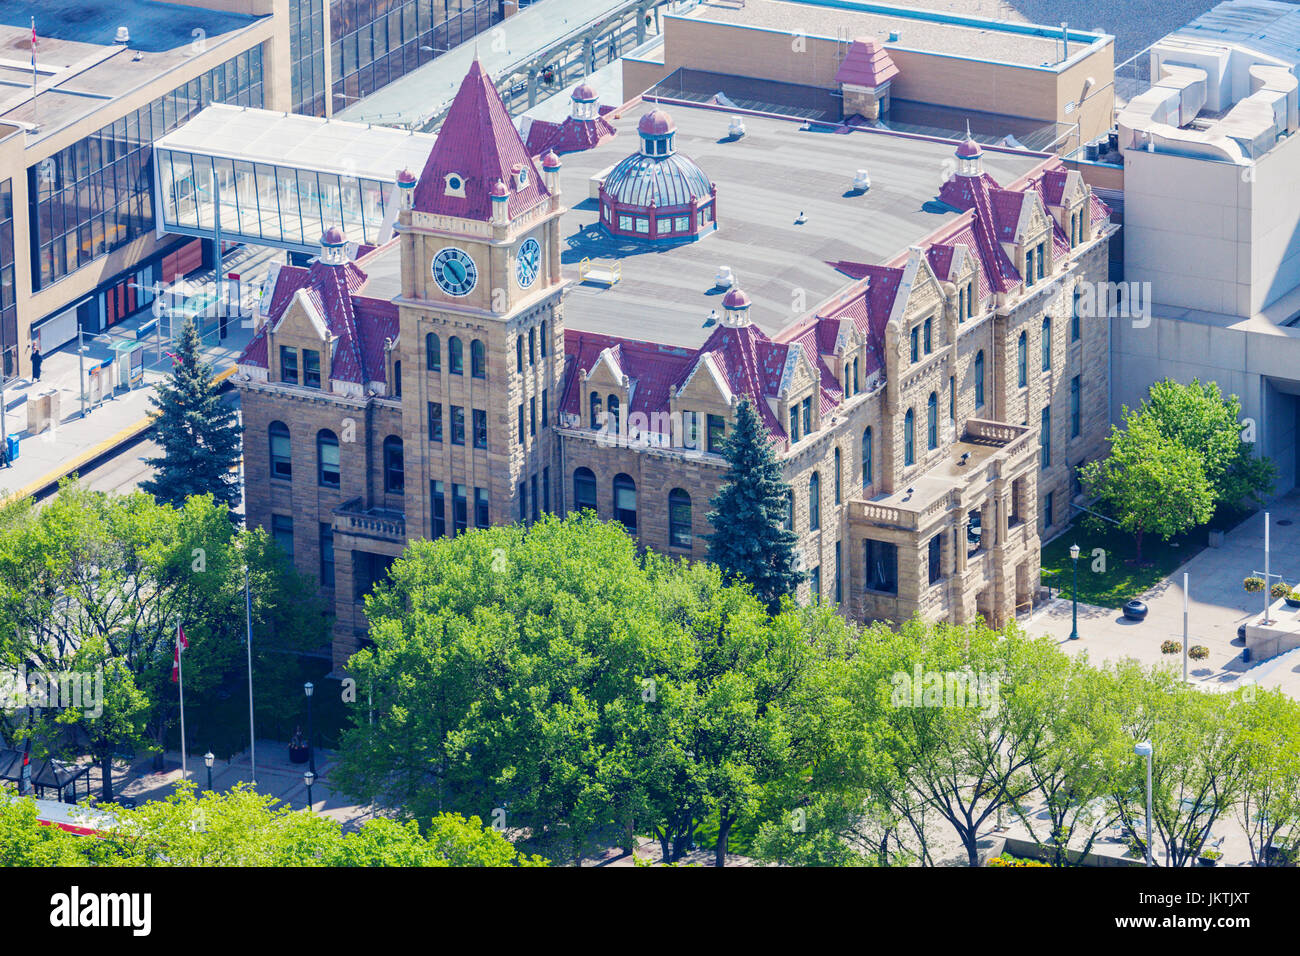 Rathaus von Calgary - Luftaufnahme. Calgary, Alberta, Kanada. Stockfoto